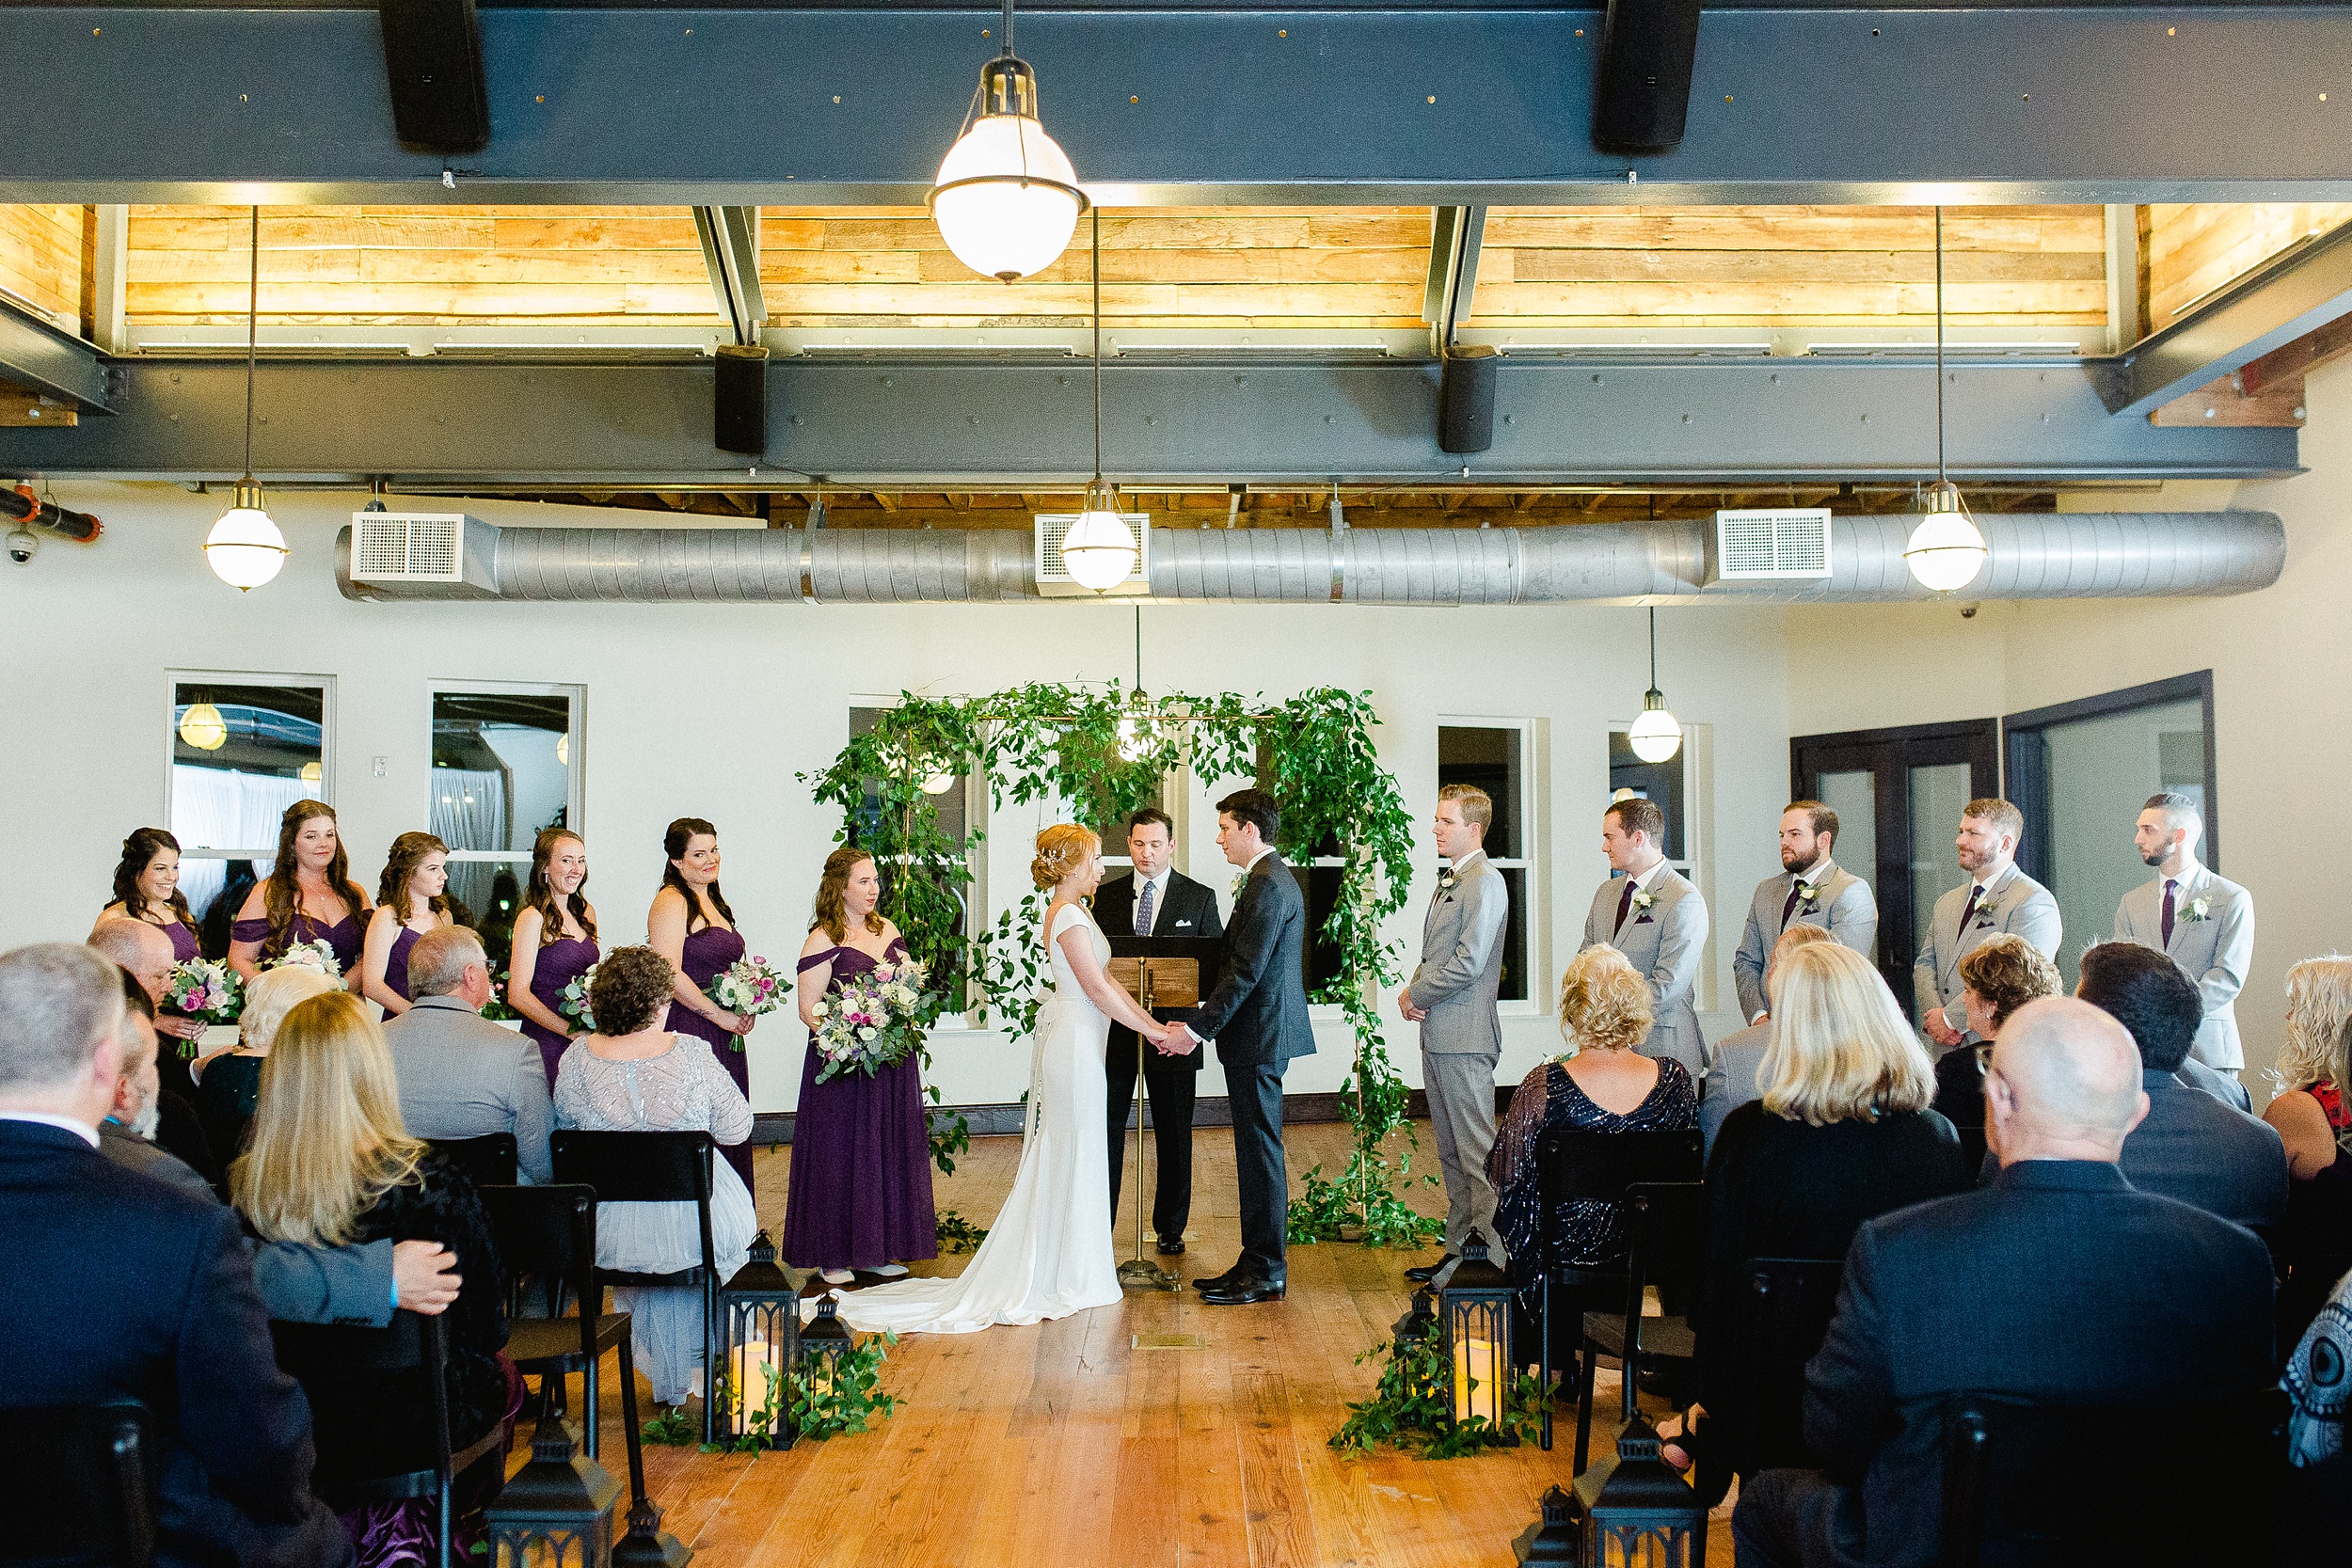 Oxford Exchange Wedding | © Ailyn La Torre Photography 2020